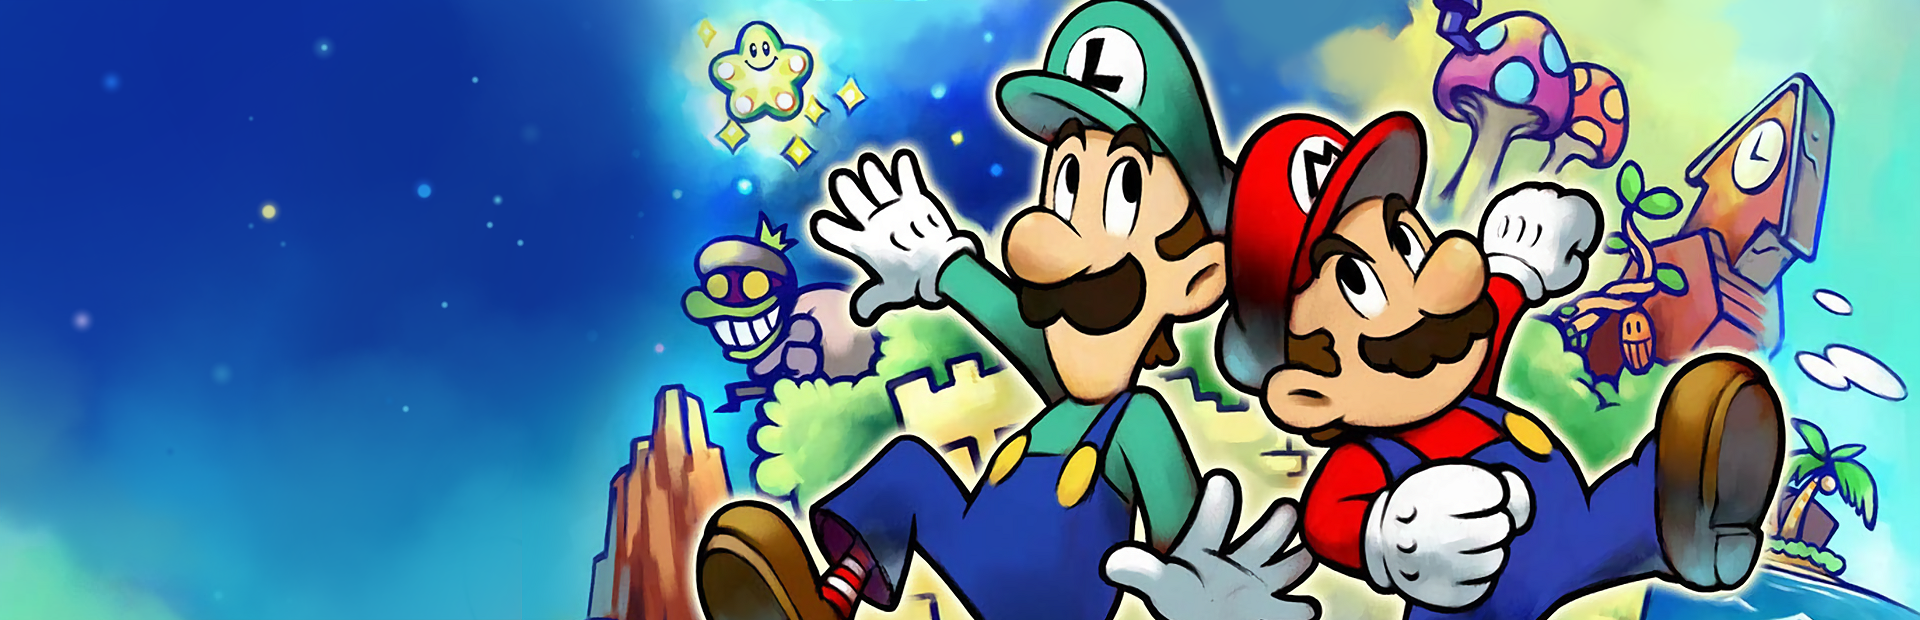 Марио и Луиджи: сага о суперзвездах. Марио и Луиджи. Суперзвезда Марио. Mario & Luigi: Superstar Saga Луиджи в платеье.